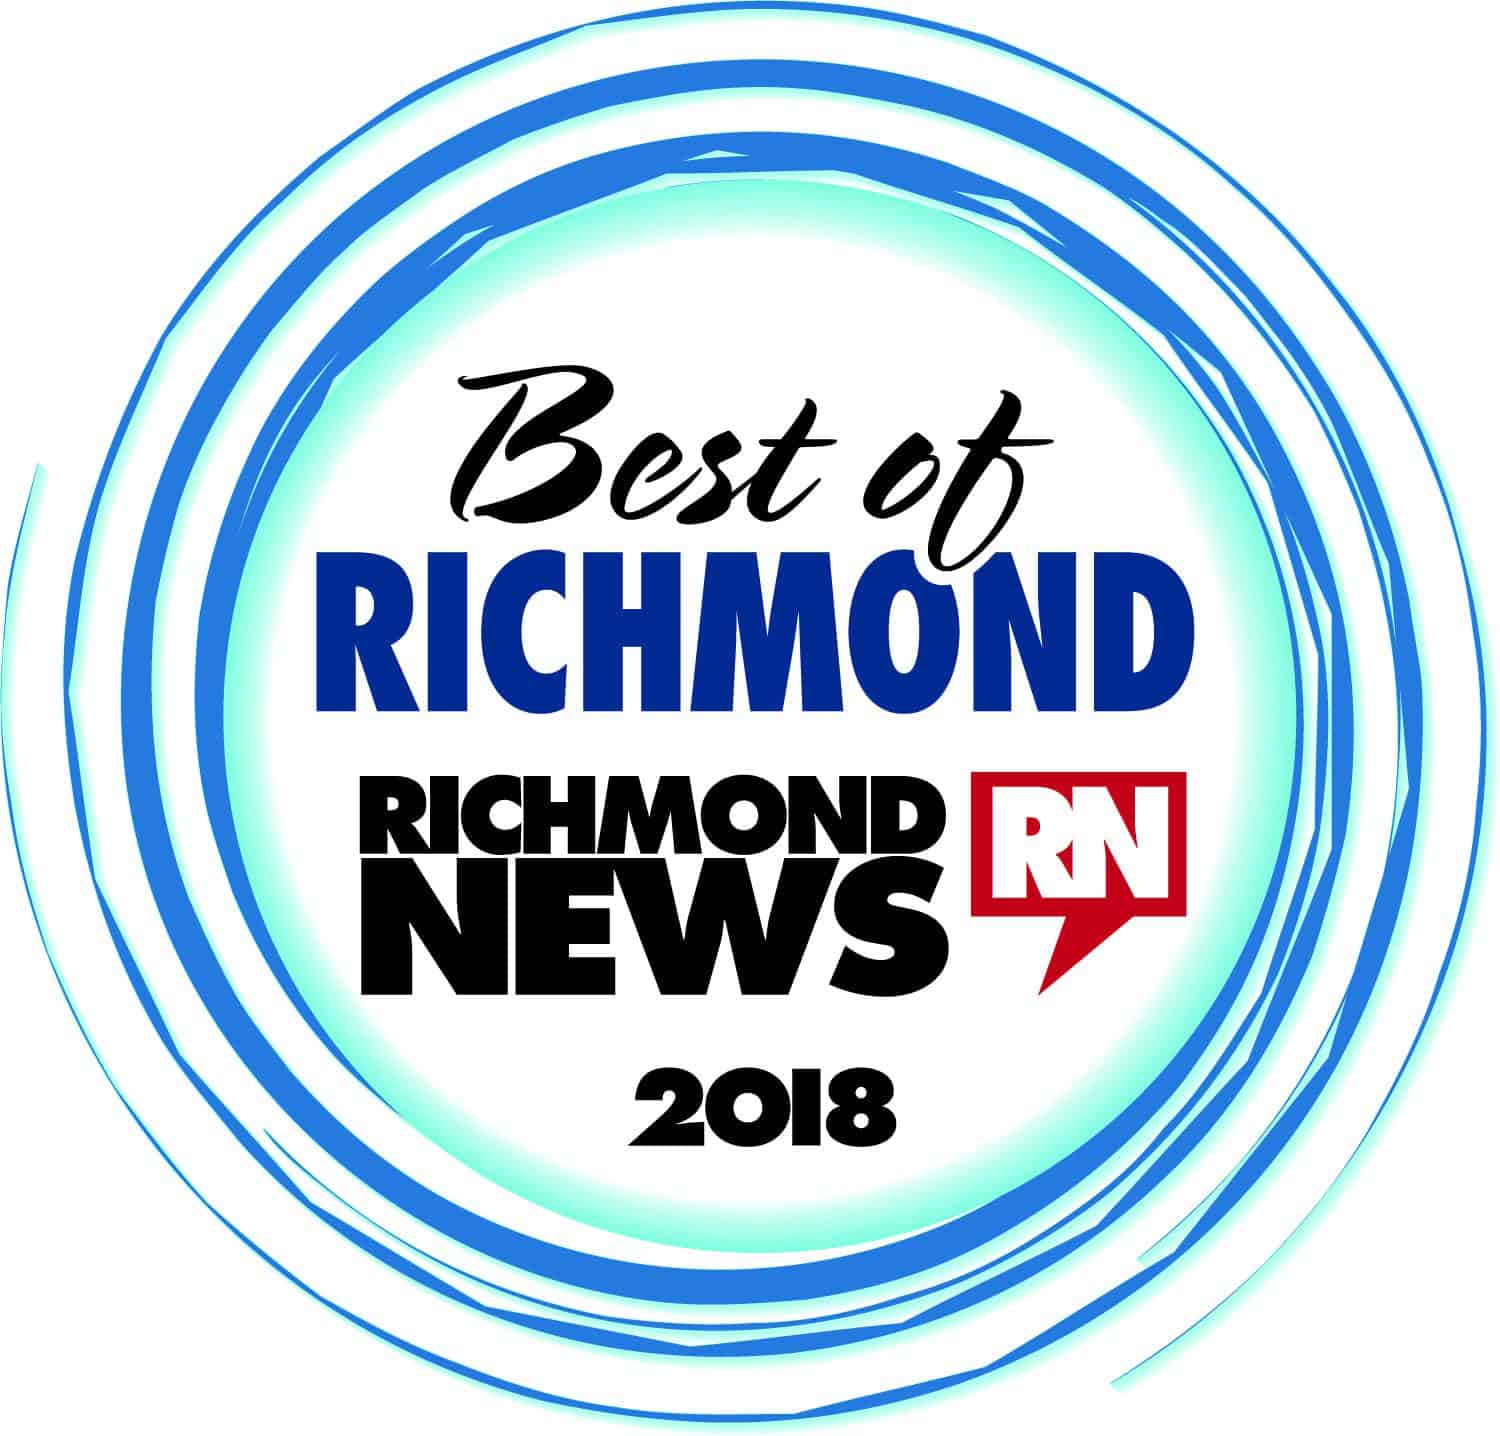 filkow law best law firm richmond award 2018